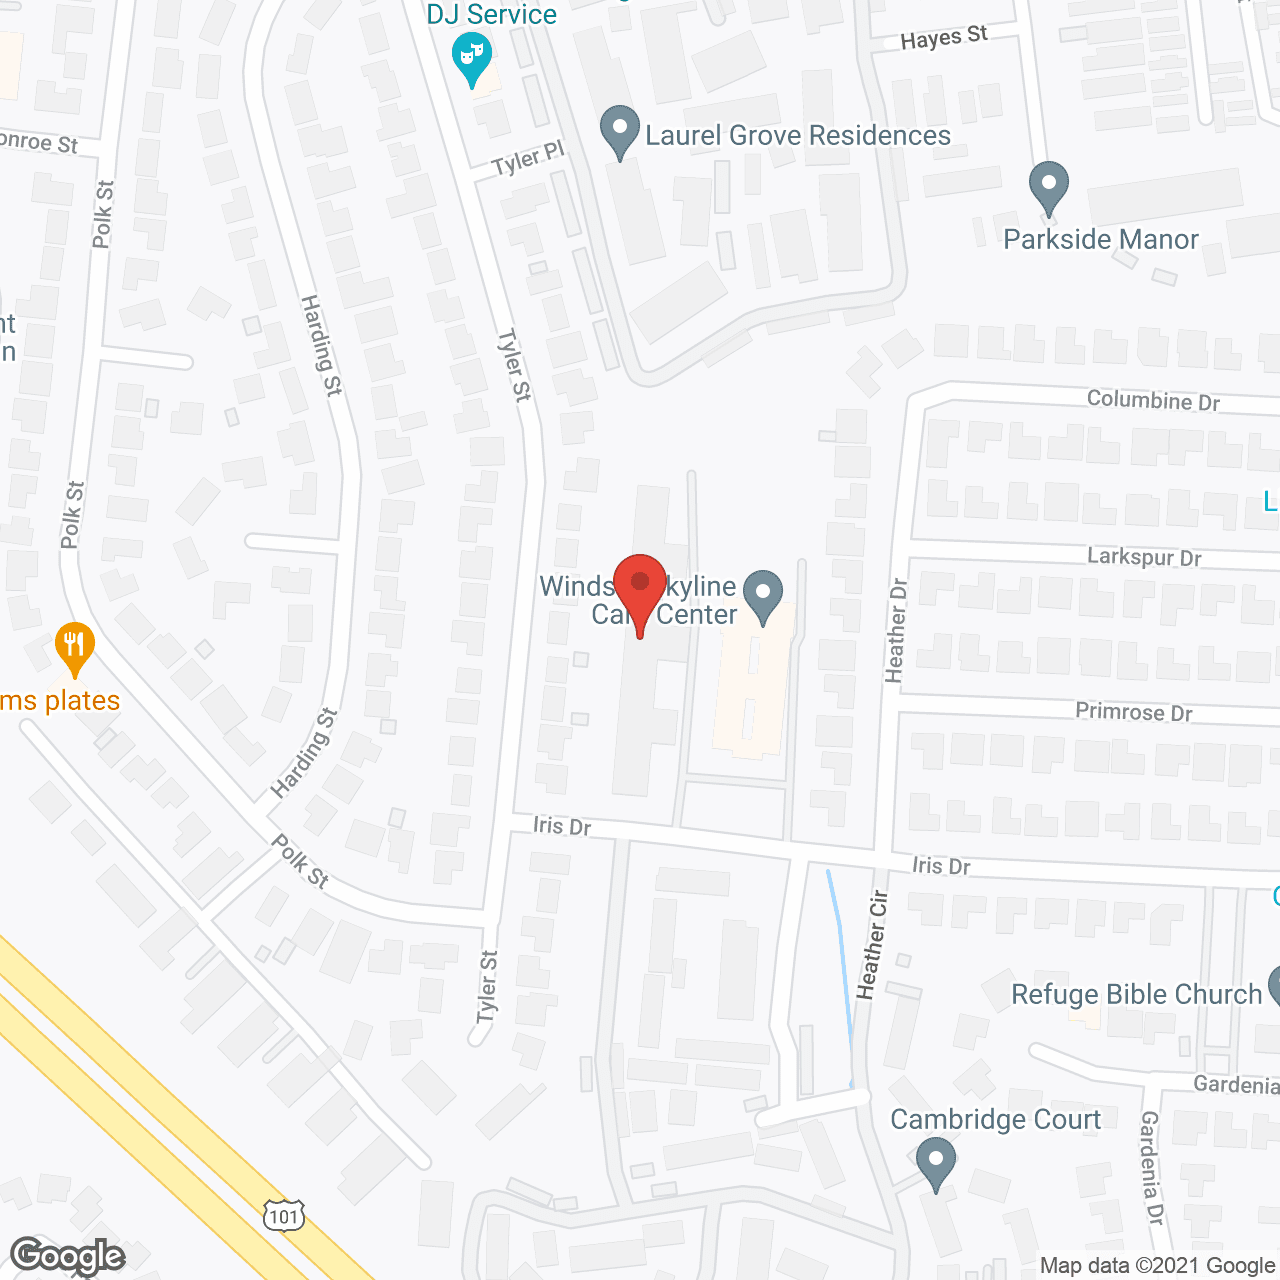 The Ridge Rehabilitation Center in google map